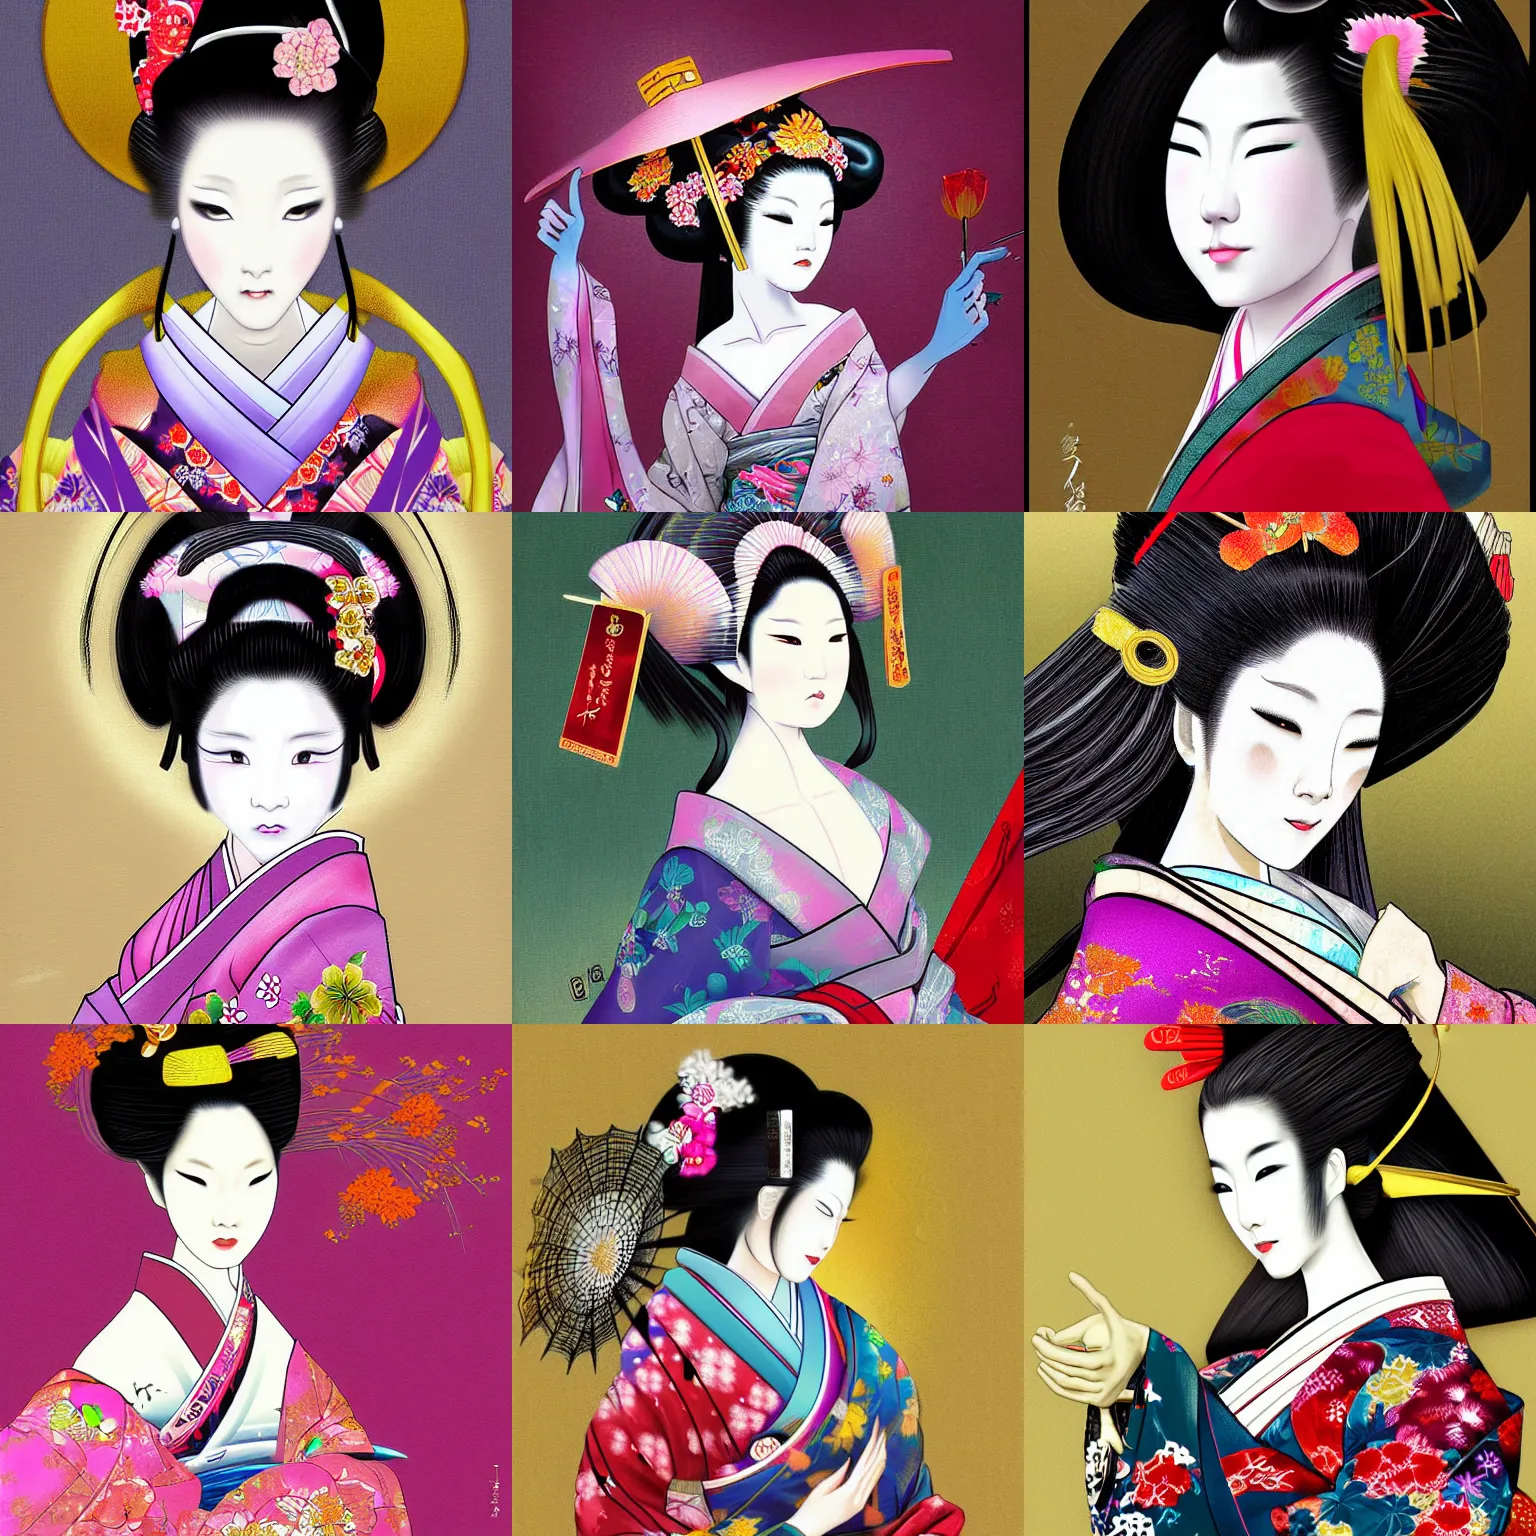 Prompt: digital painting of a beautiful geisha by yoshitaka amano